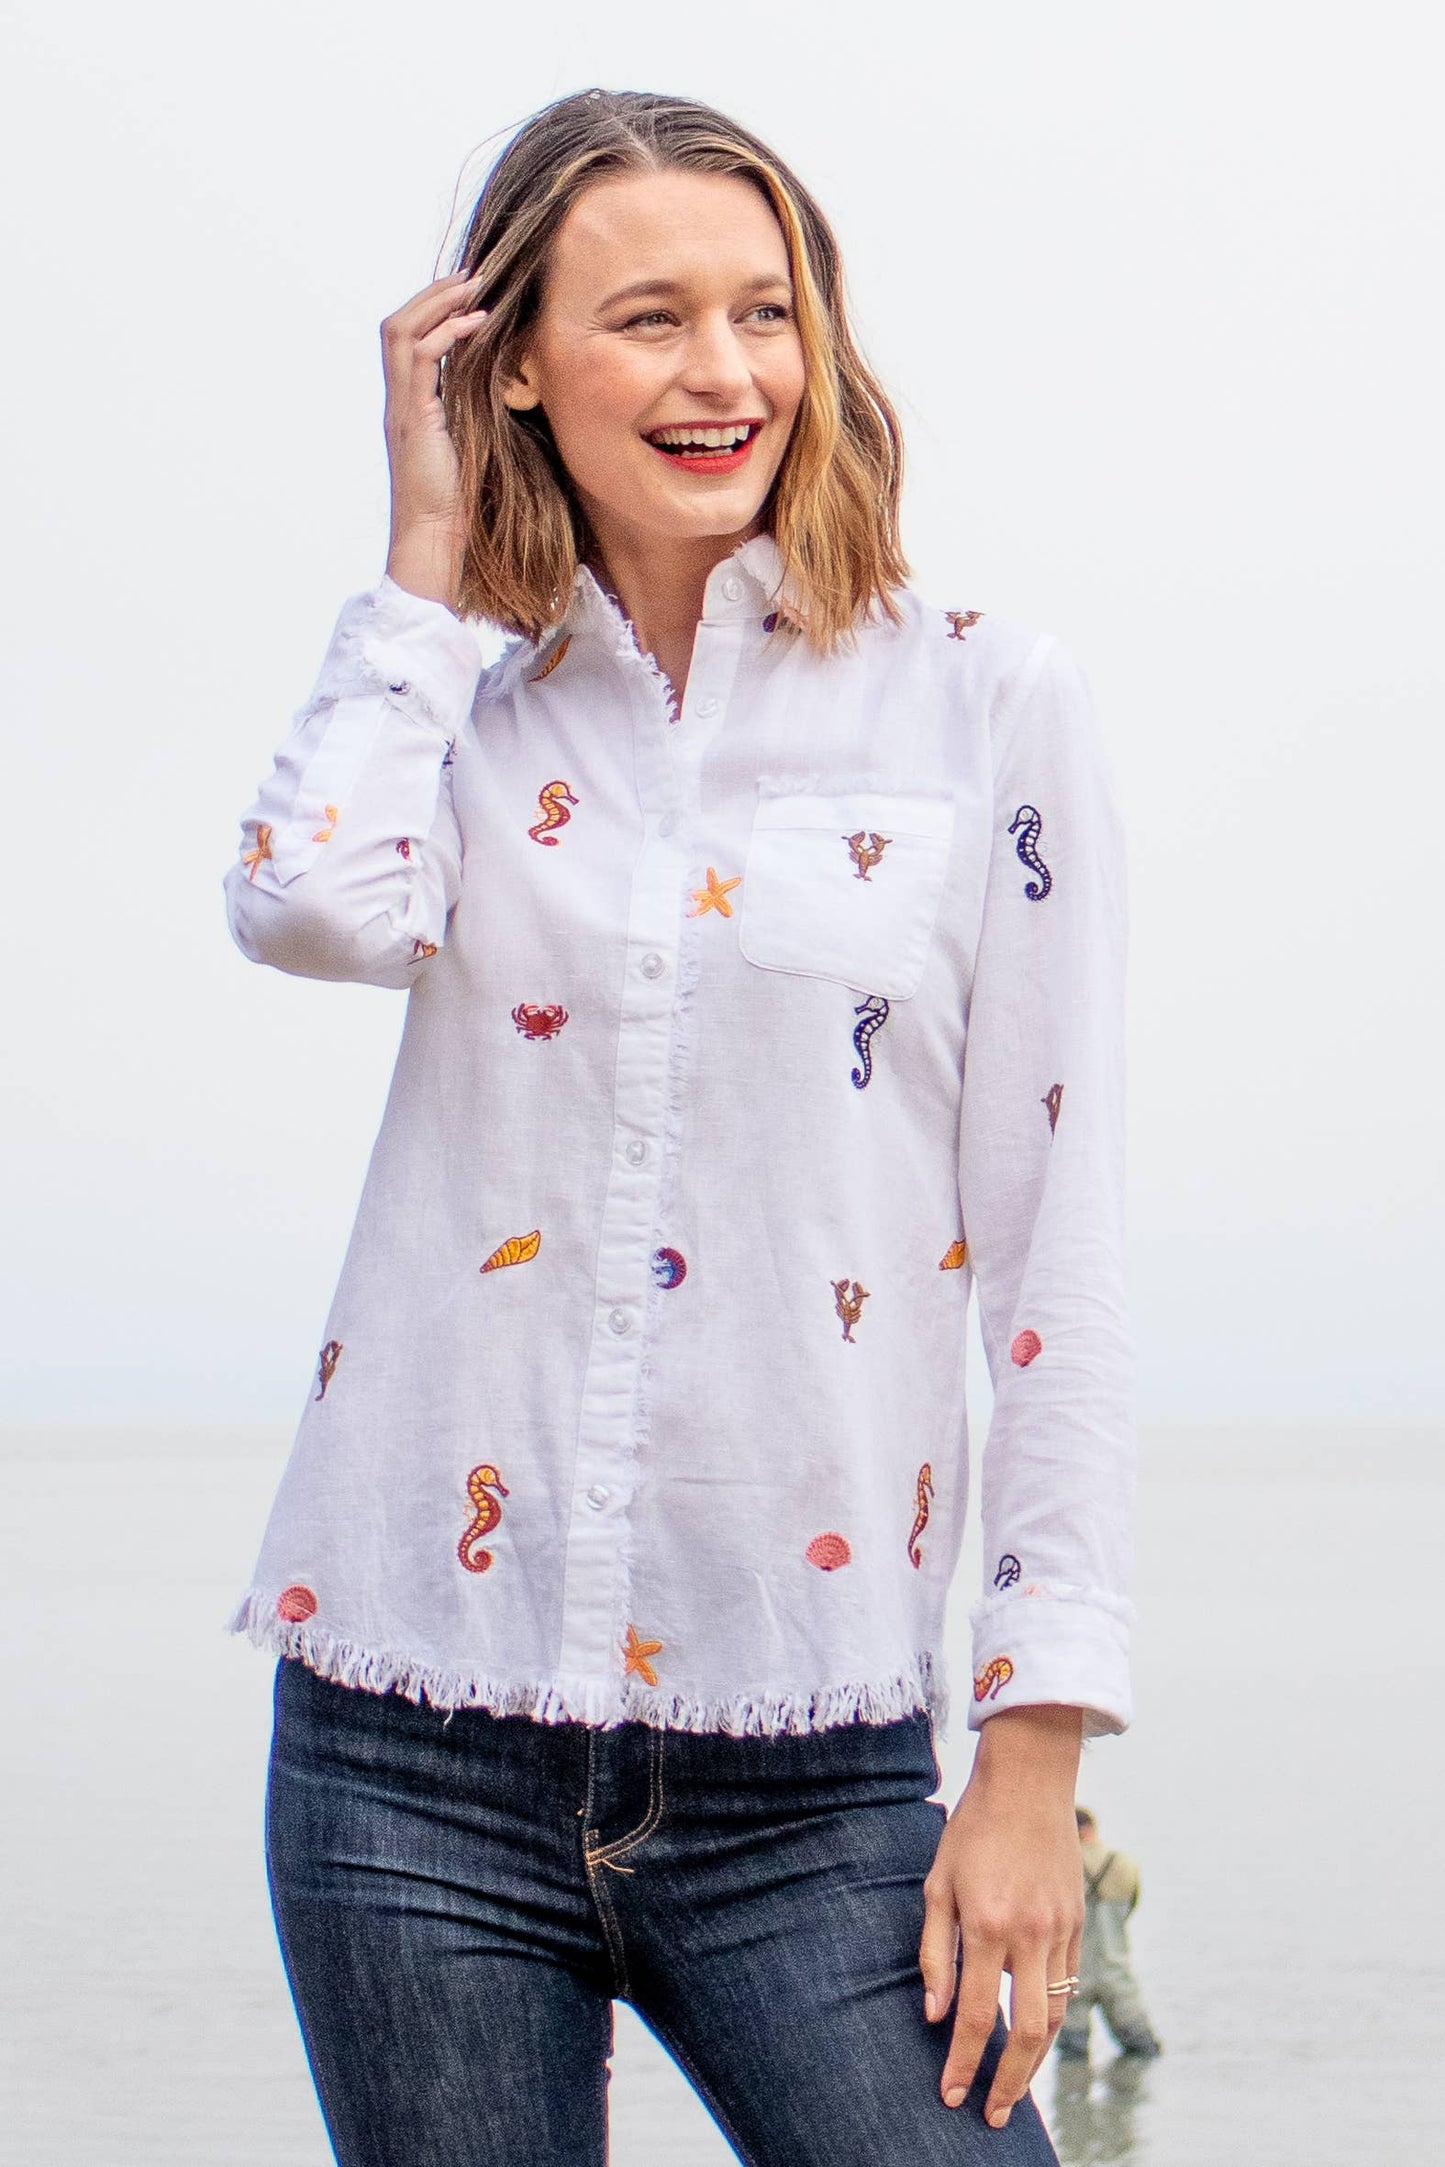 Dizzy-Lizzie - Cape Cod Shirt Embroidered Sealife | 4949-R301